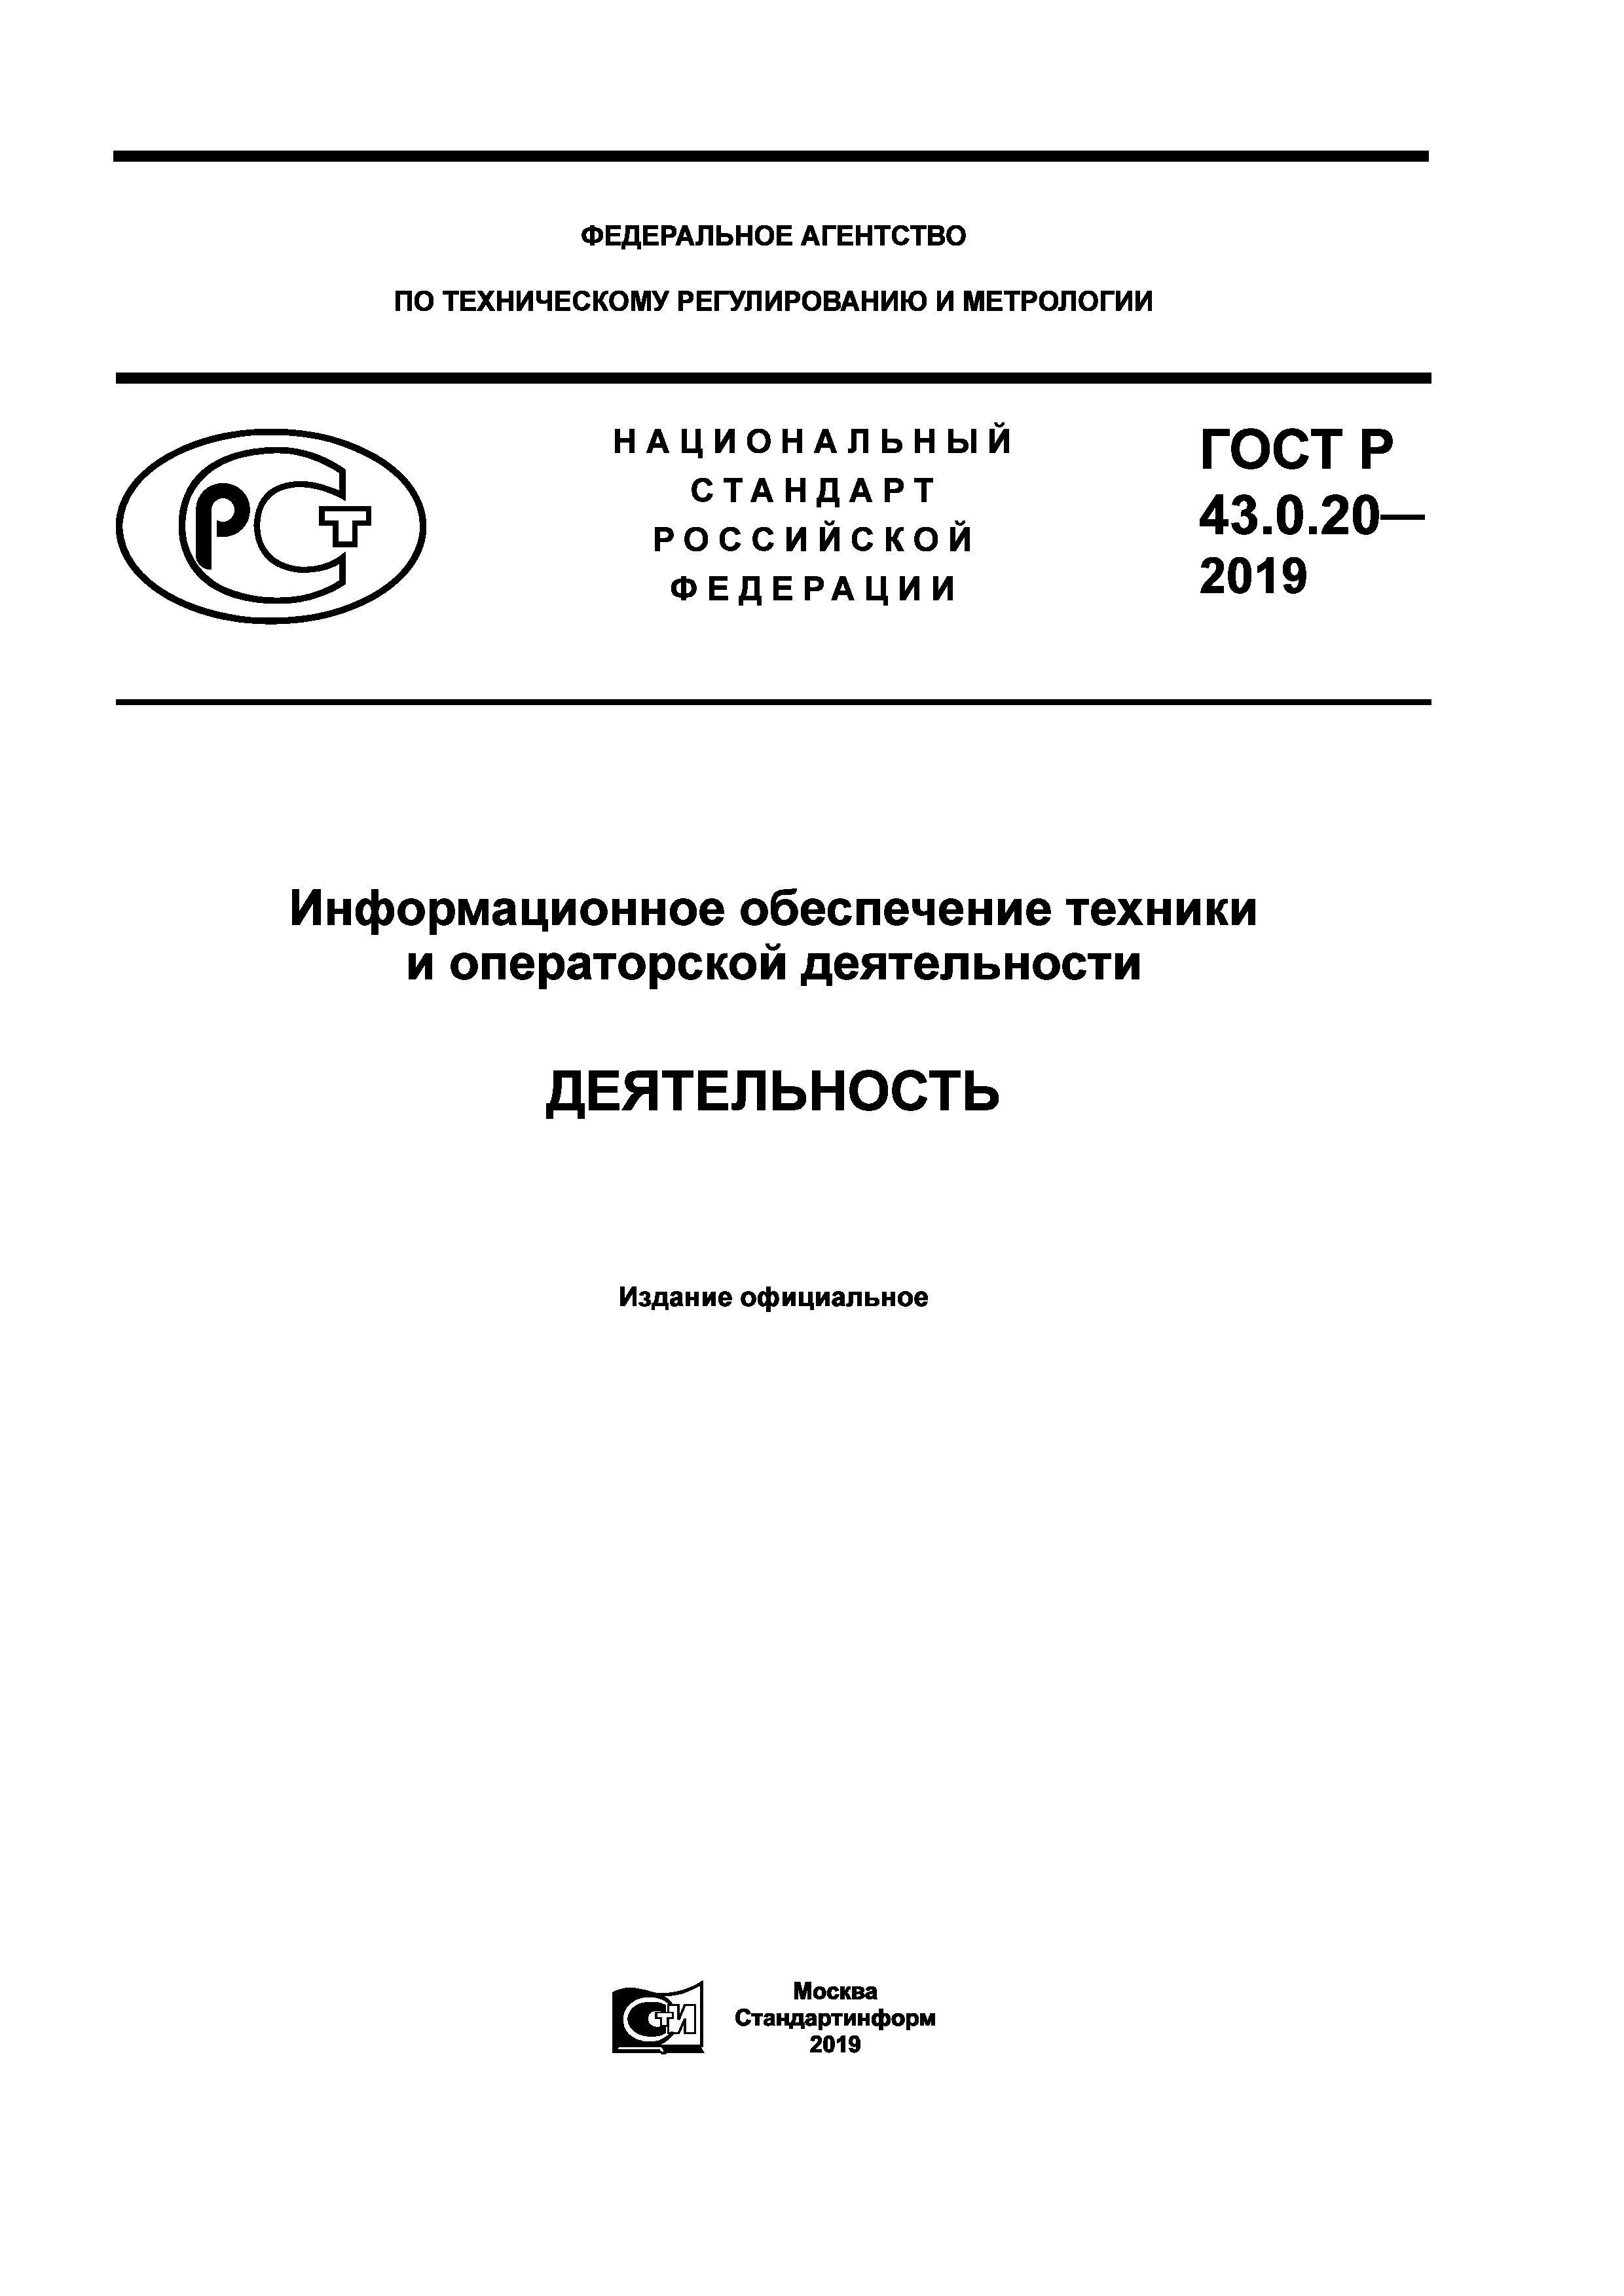 ГОСТ Р 43.0.20-2019